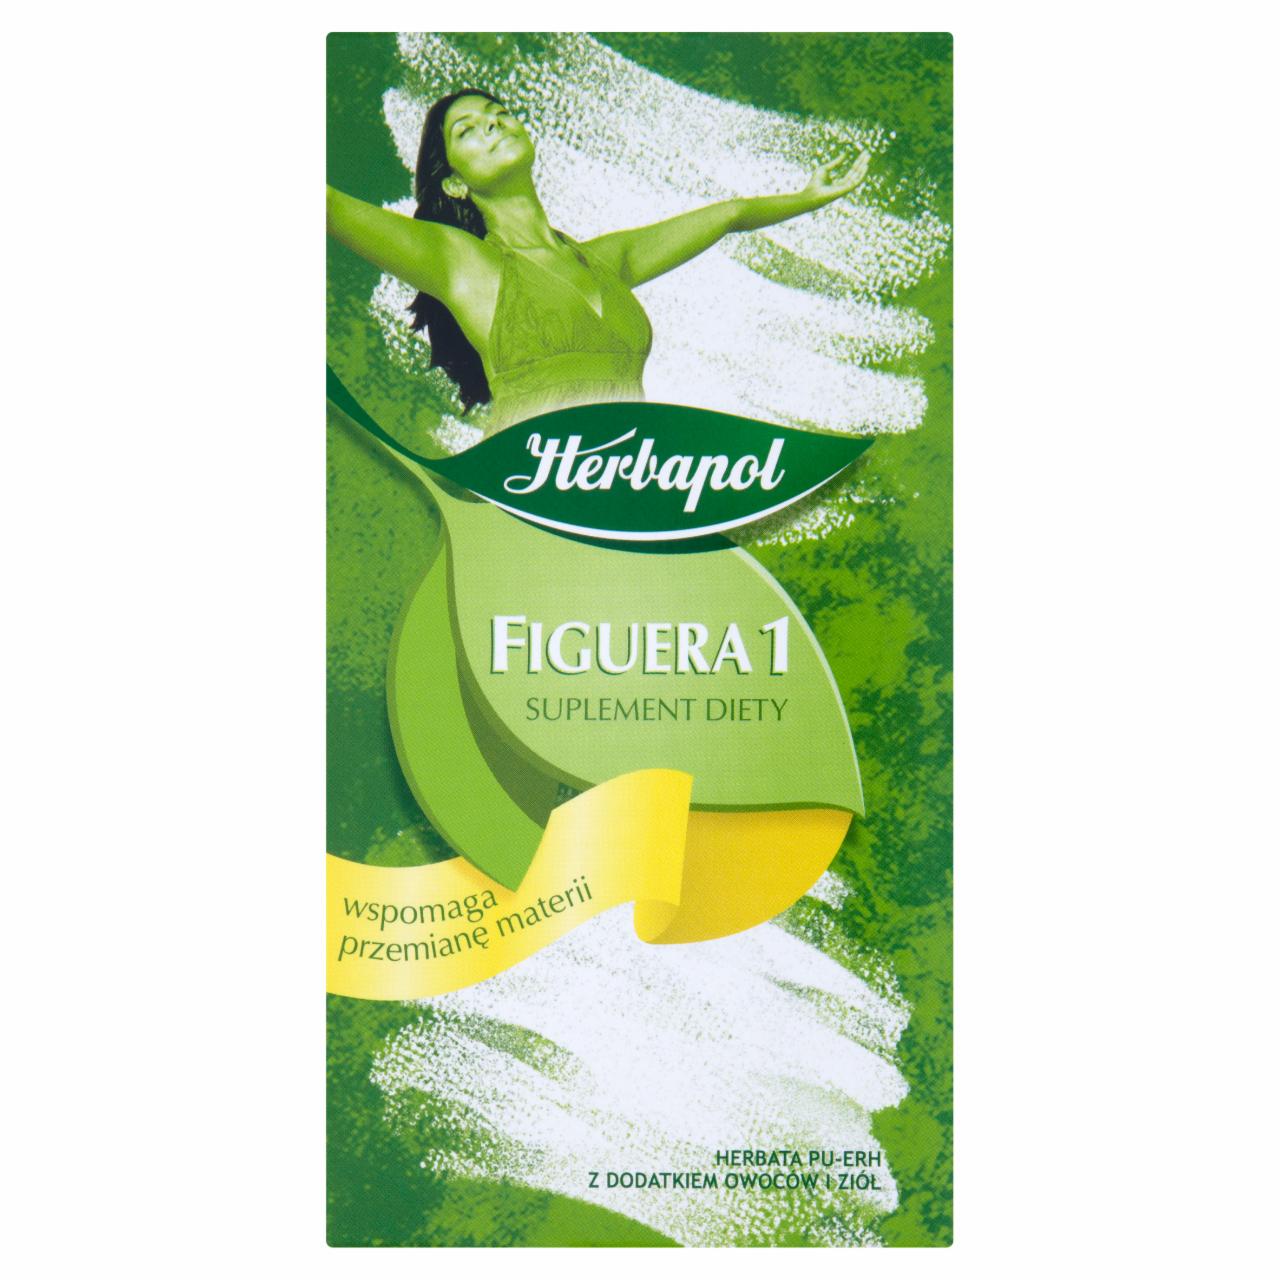 Zdjęcia - Herbapol Figuera 1 Suplement diety Herbata Pu-Erh 40 g (20 torebek)